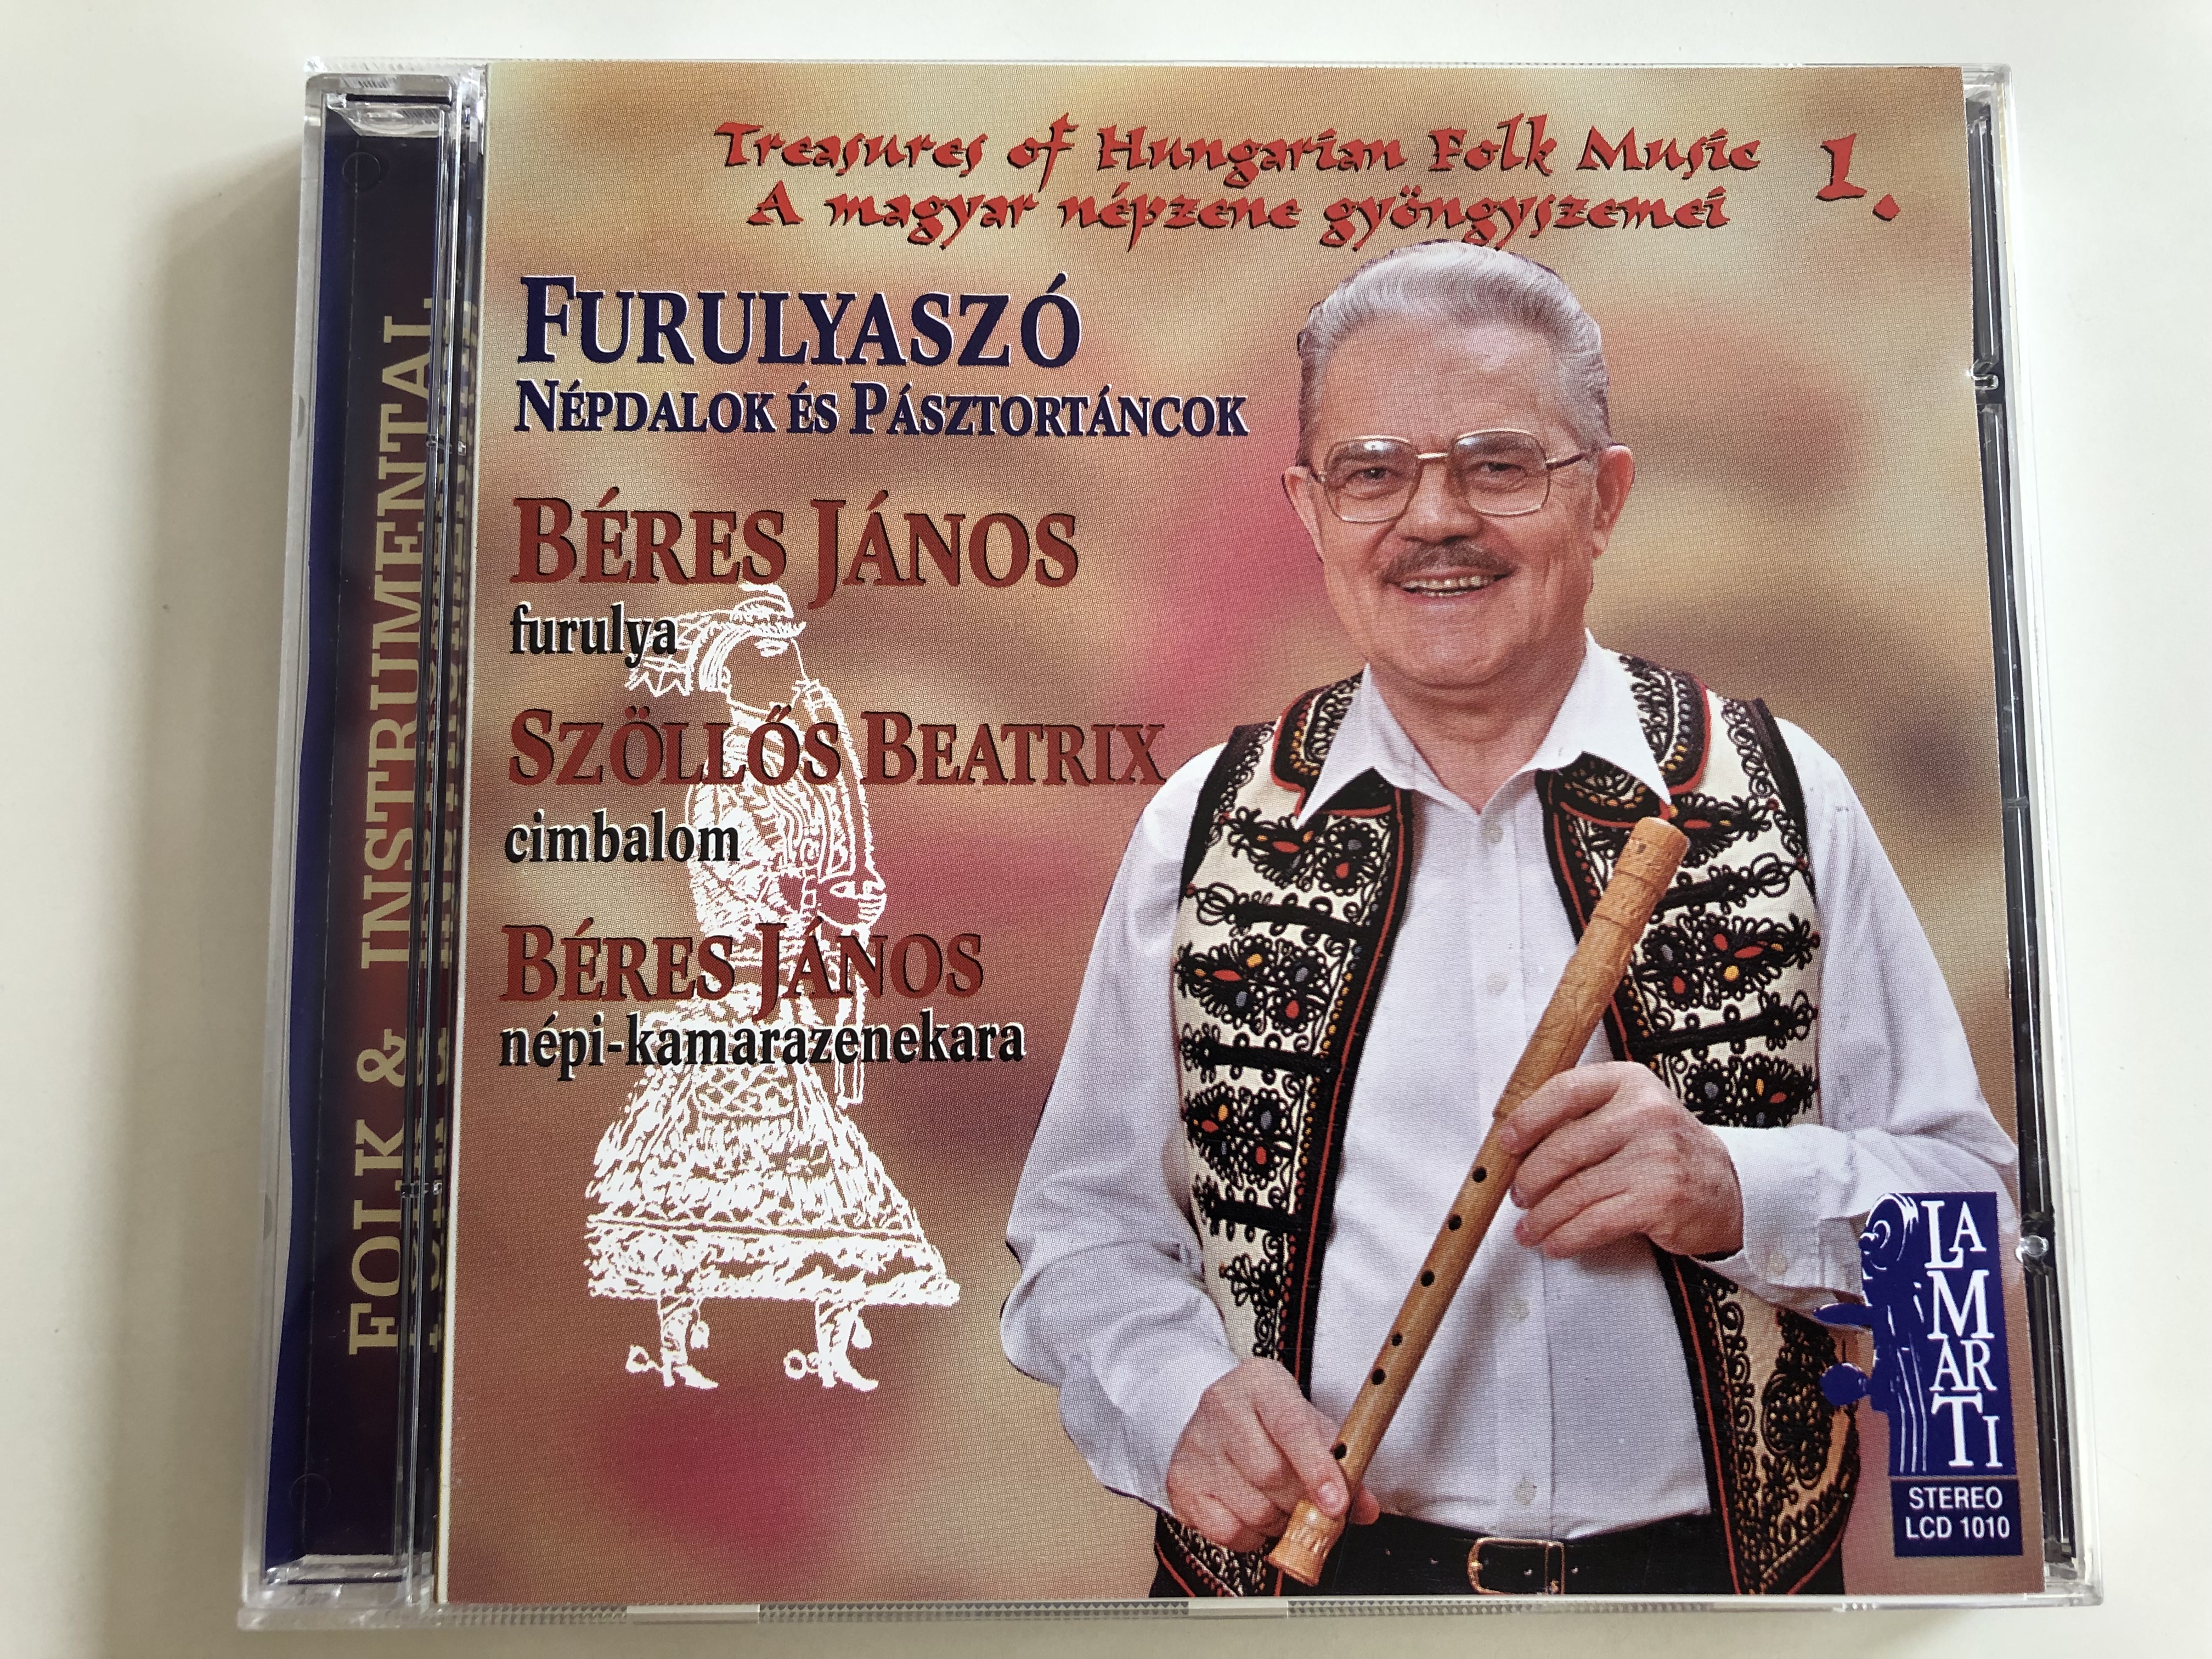 treasures-of-hungarian-folk-music-1.-a-magyar-nepzene-gyongyszemei-1.-furulyaszo-nepdalok-es-pasztortancok-beres-janos-szollos-beatrix-betres-janos-lamarti-audio-cd-stereo-1996-lcd-1010-1-.jpg